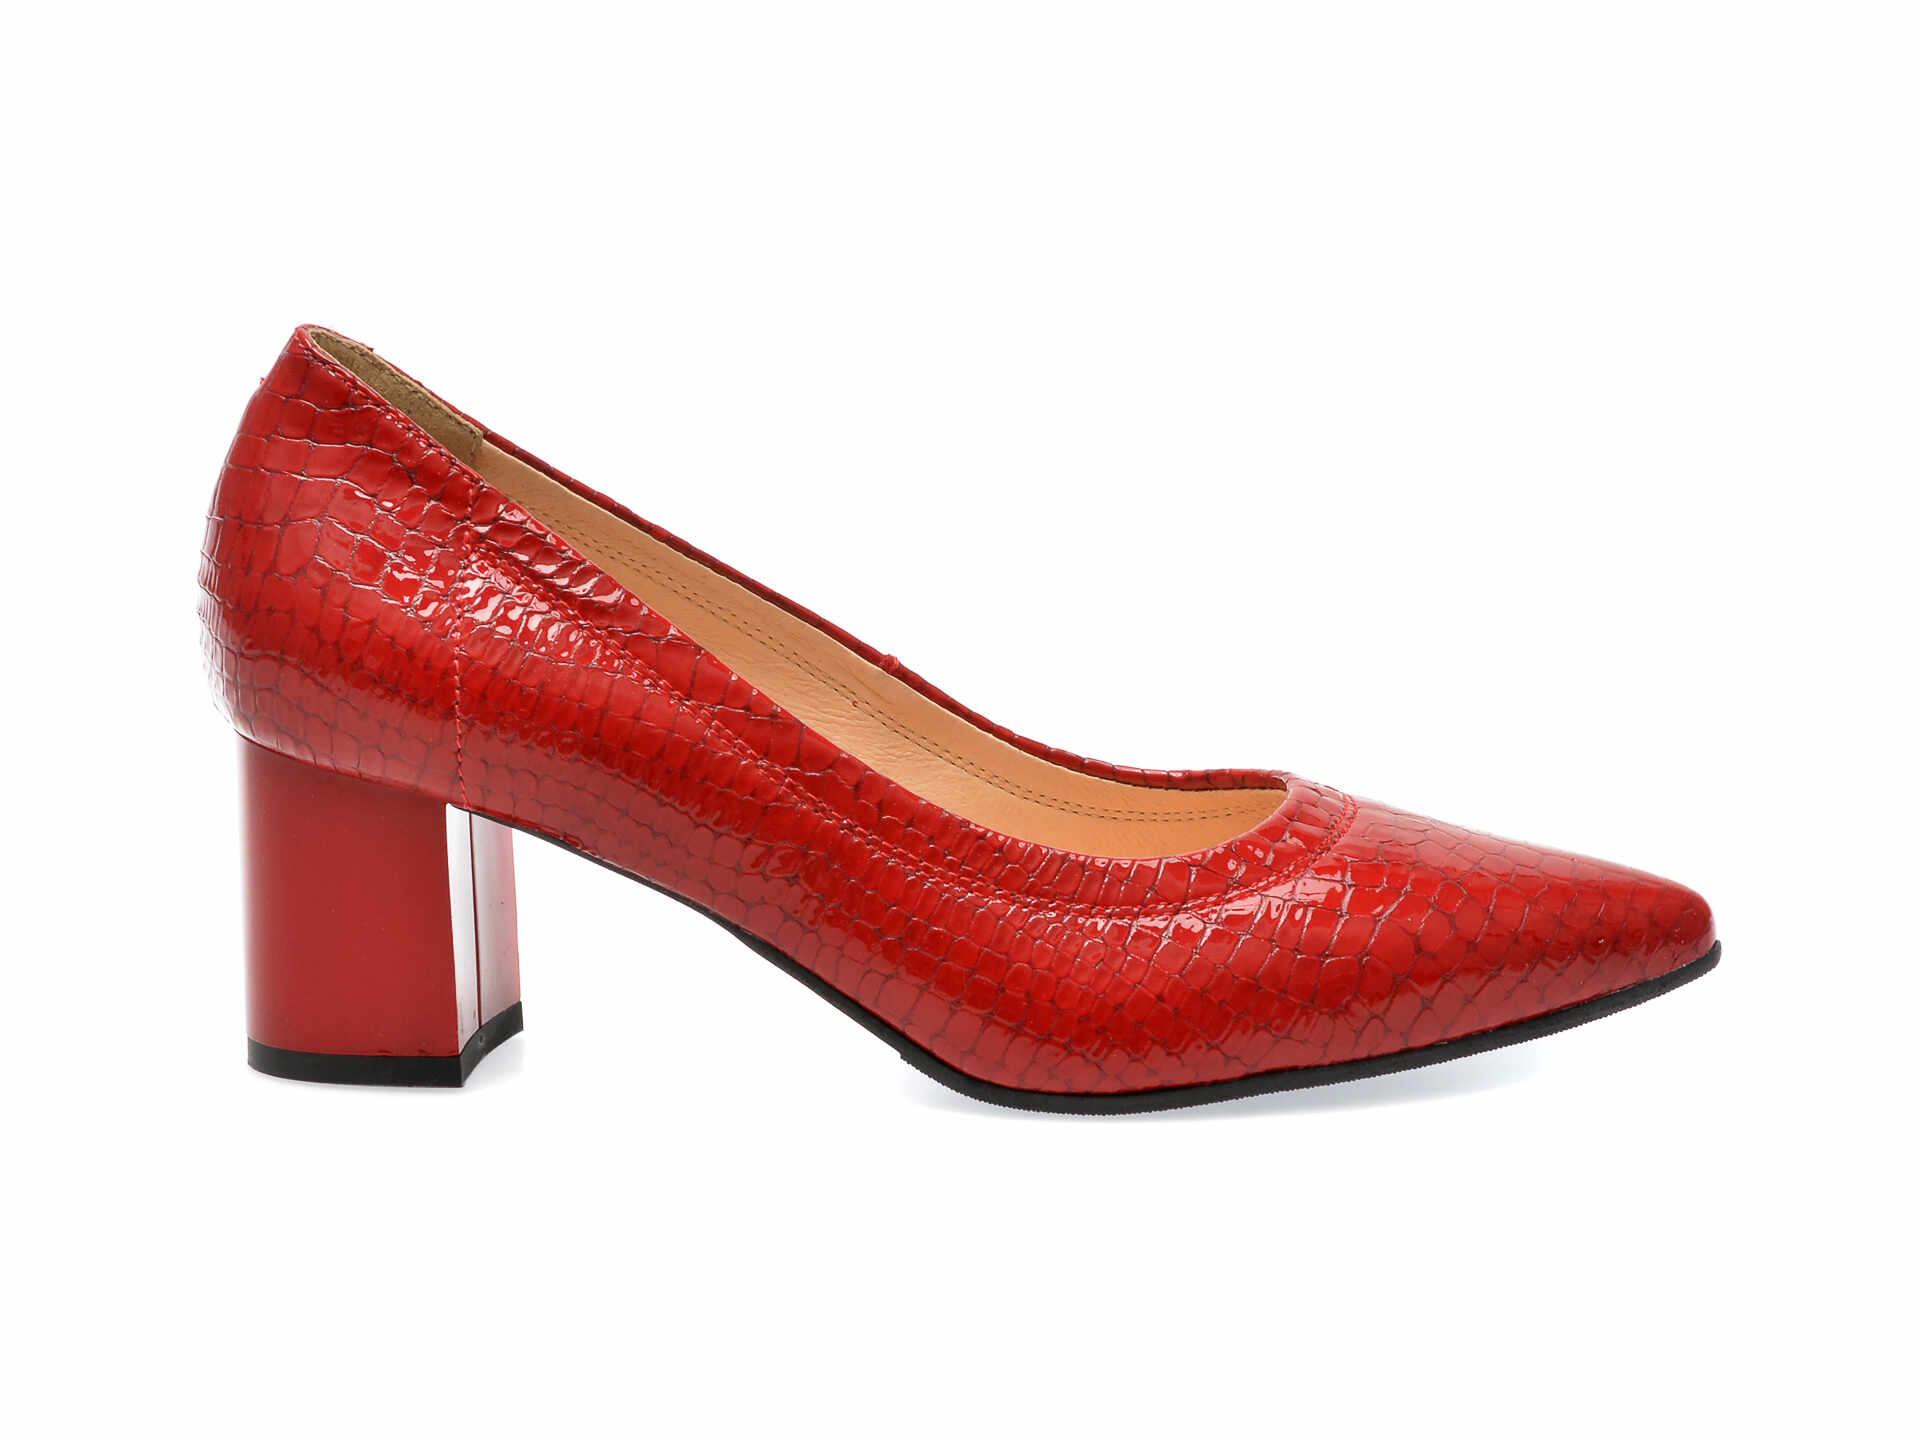 Pantofi IMAGE rosii, 5841, din piele naturala lacuita